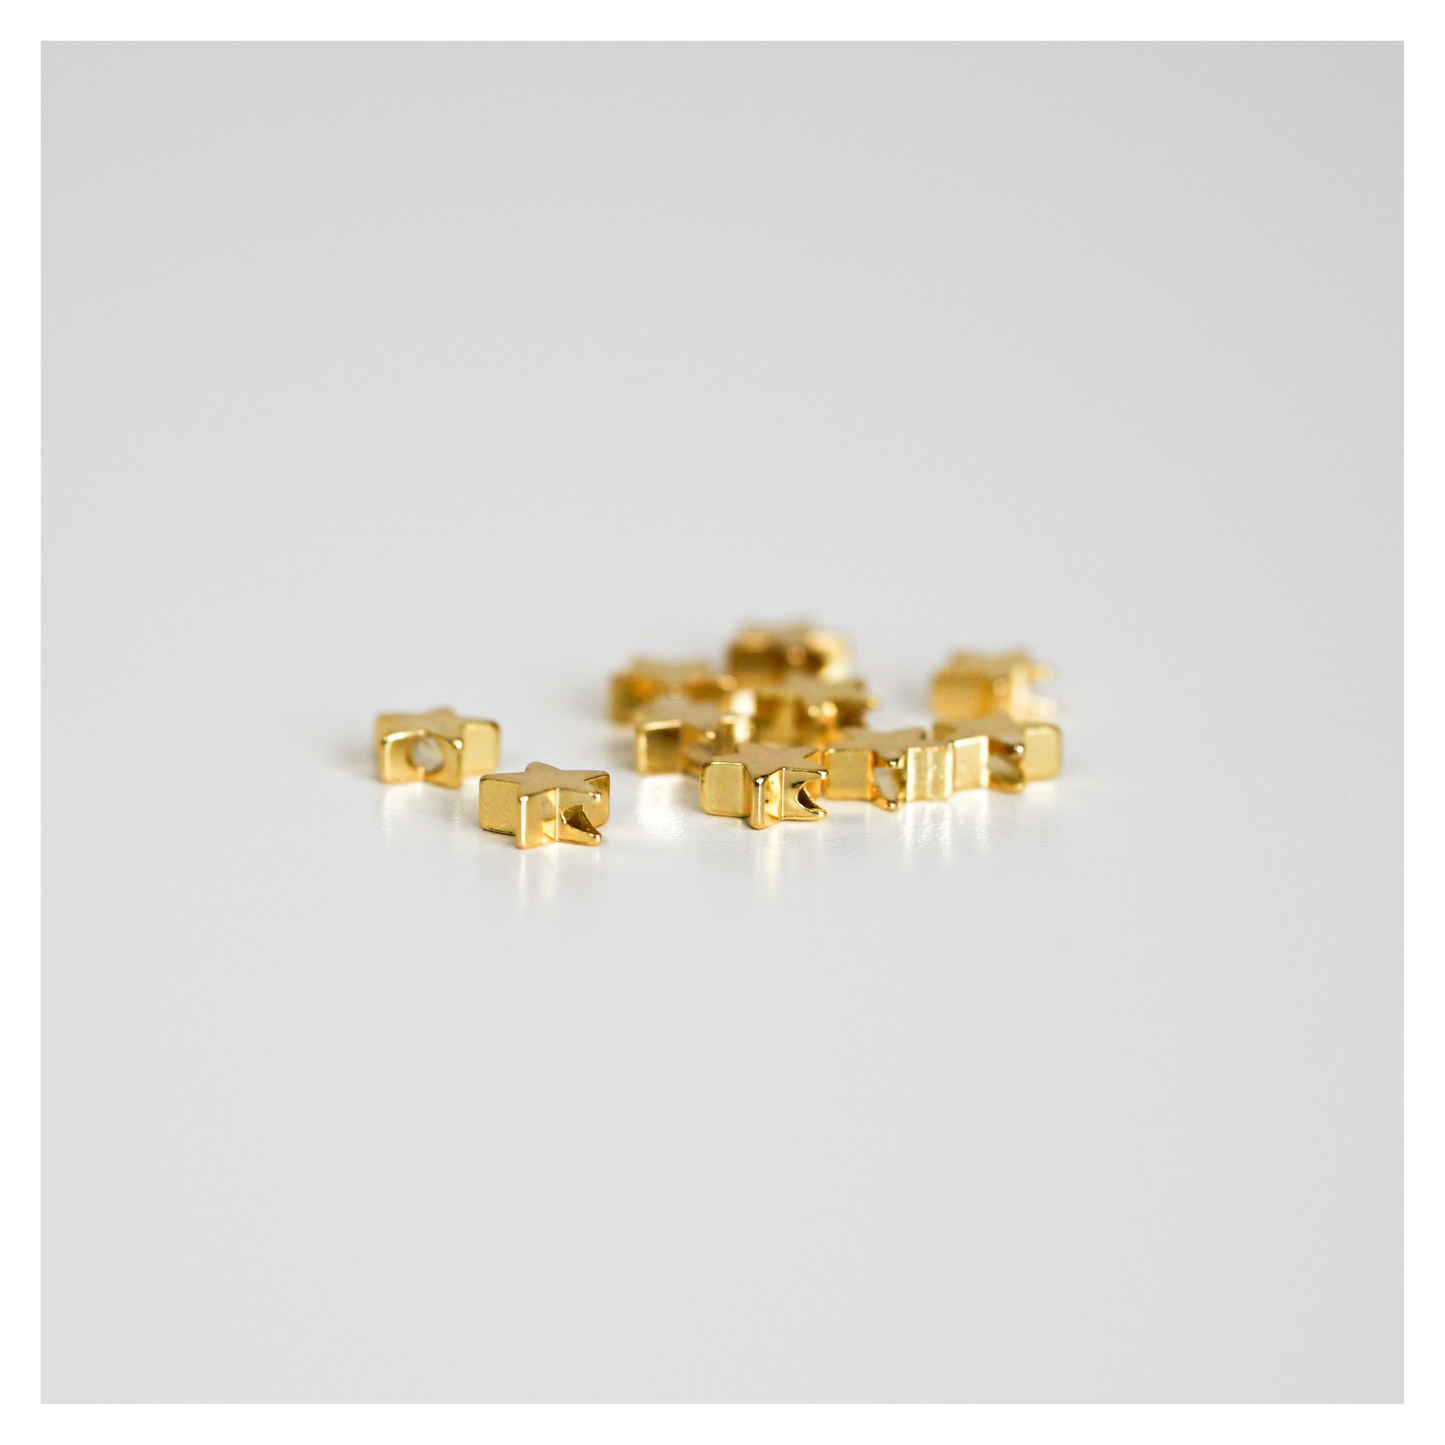 1.5mm Brass Star Loc Beads - 10 Pieces